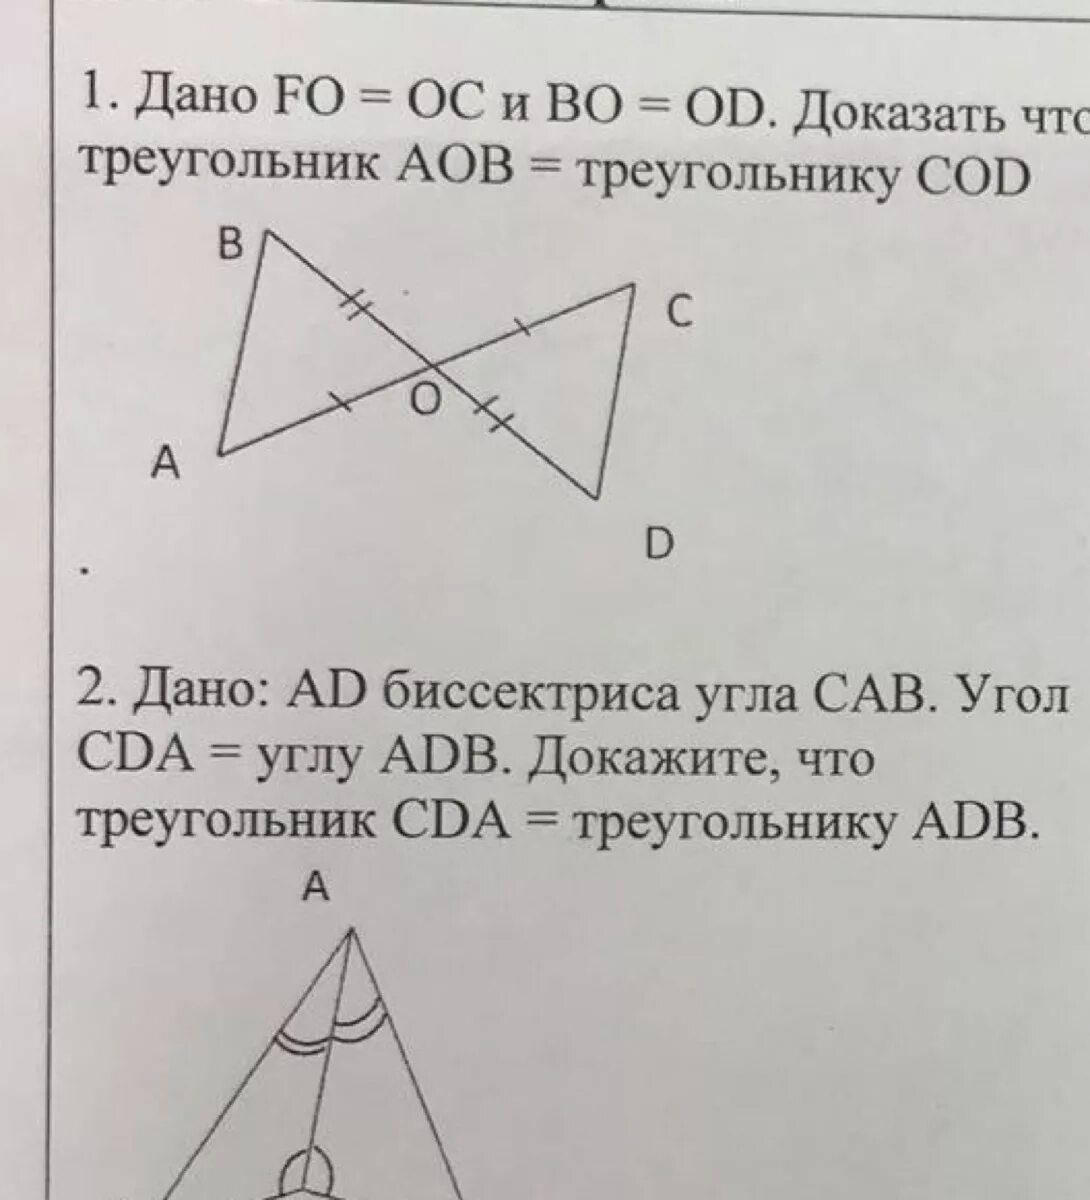 Дано угол abc равен углу adb. Доказать треугольник. Докажите что треугольники равны. Докажите что треугольник AOB треугольнику Cod. Доказать что треугольник ABC равен треугольнику ADB.